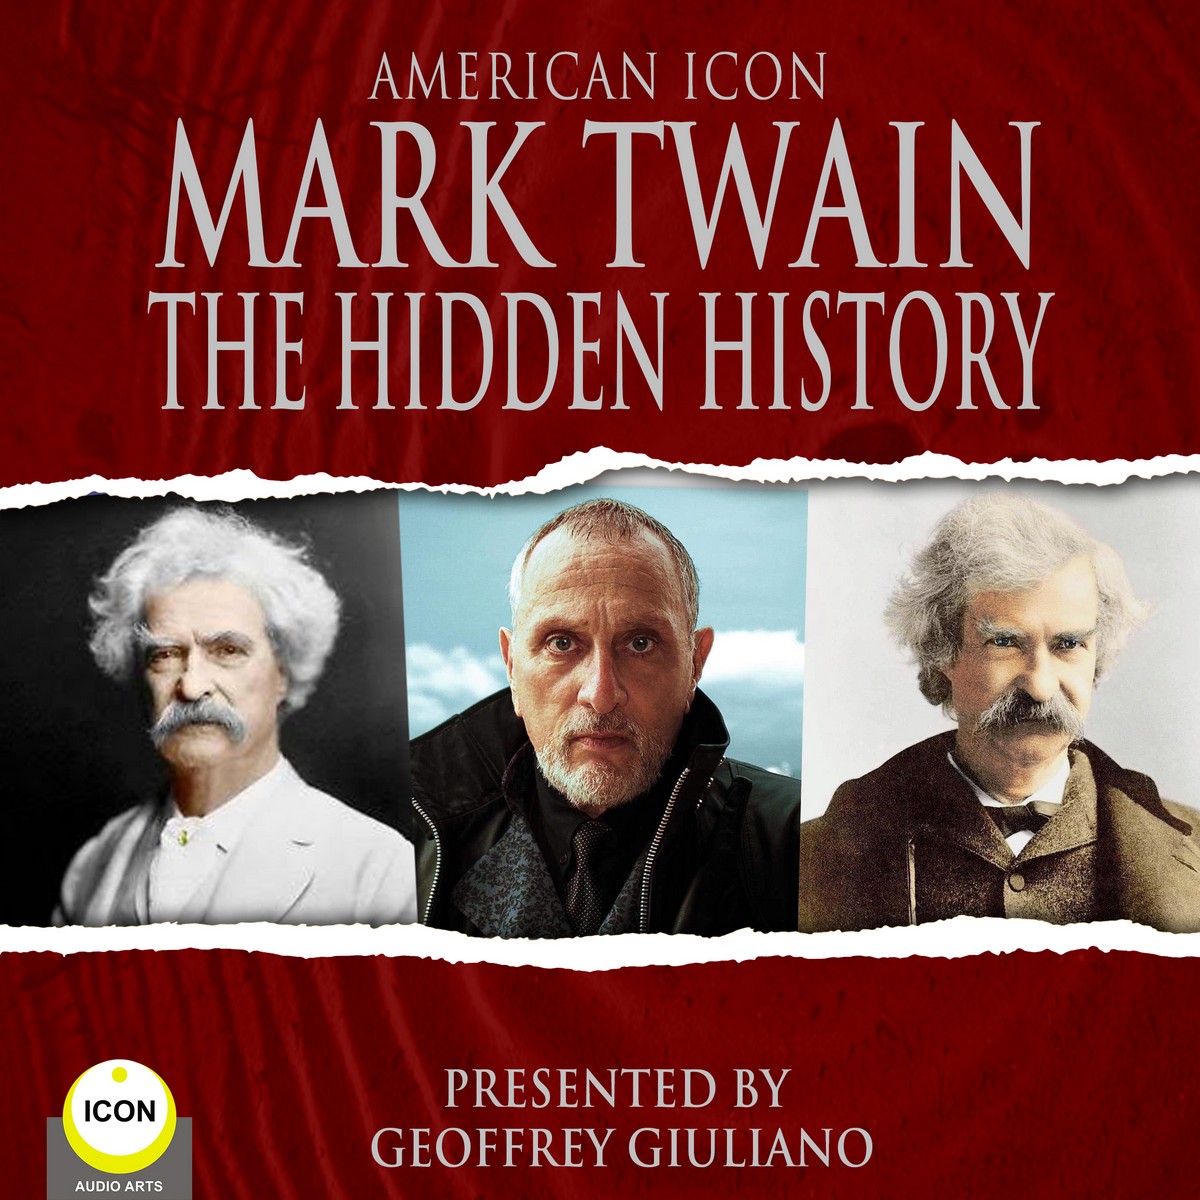 American Icon Mark Twain The Hidden History